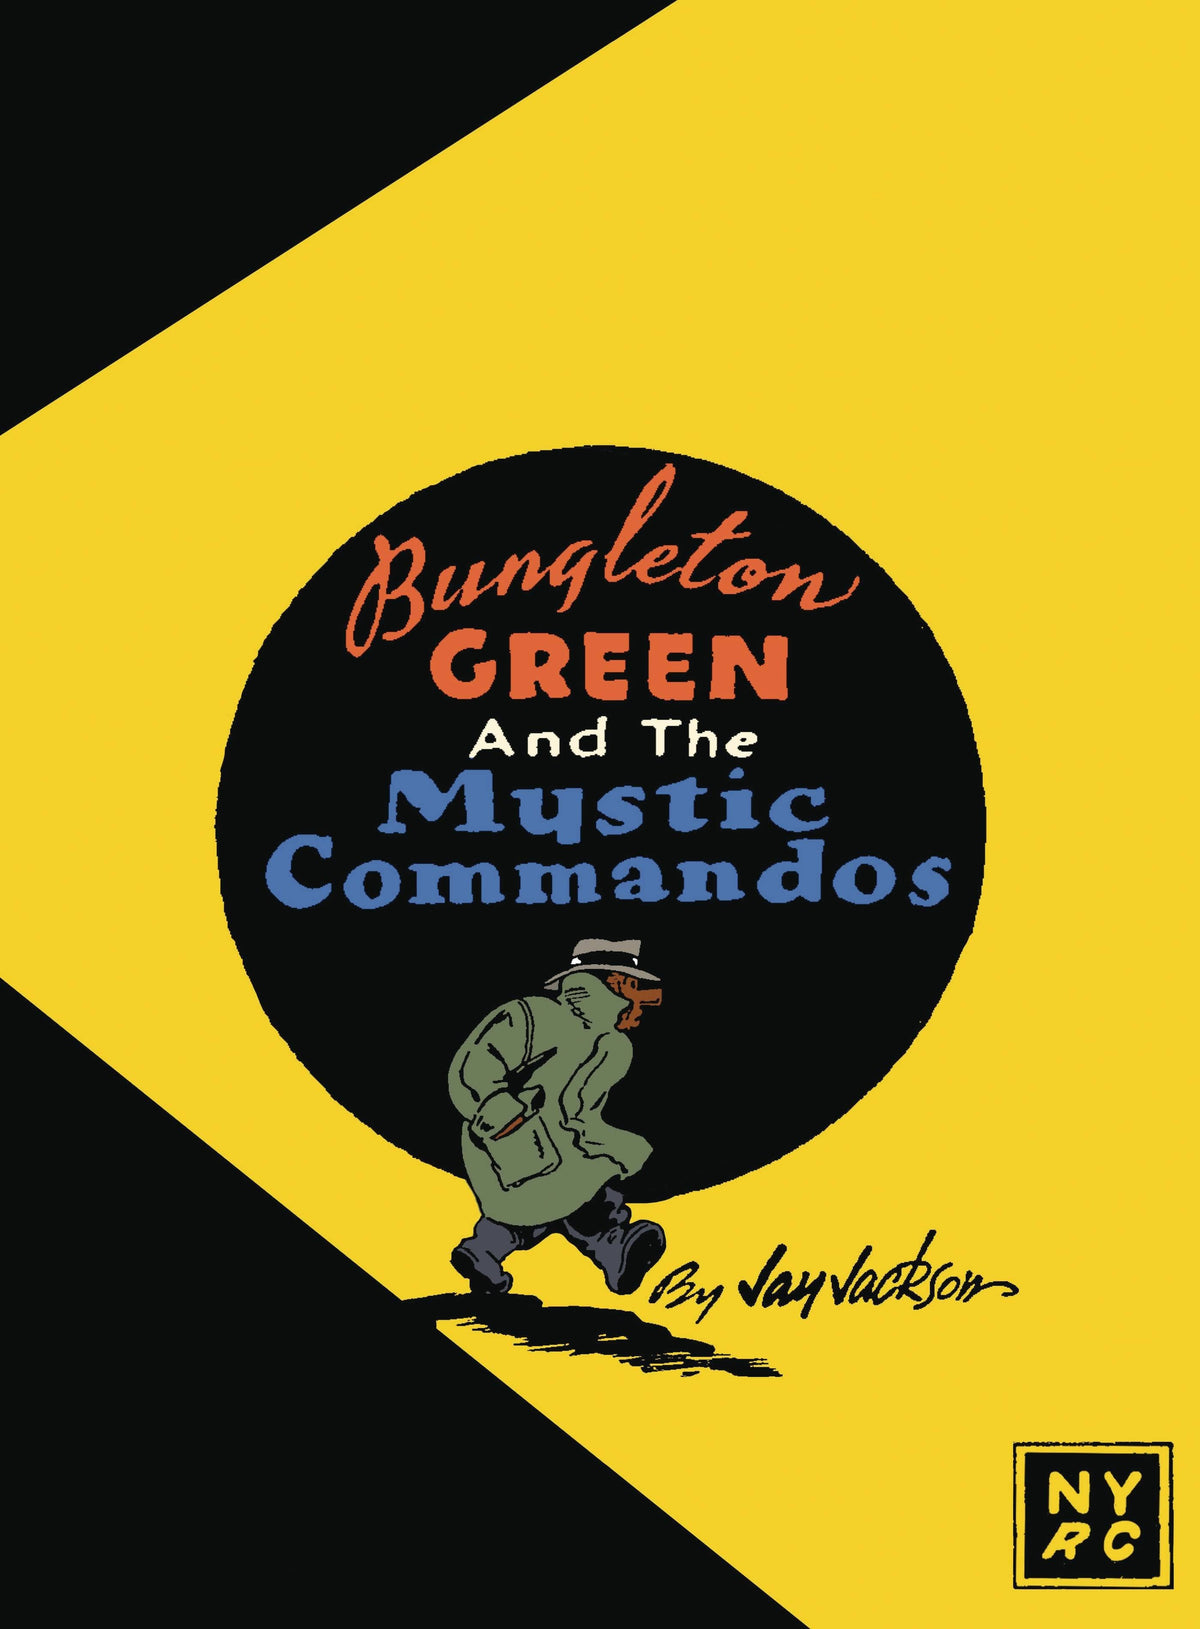 BUNGLETON GREEN & MYSTIC COMMANDOS - Third Eye